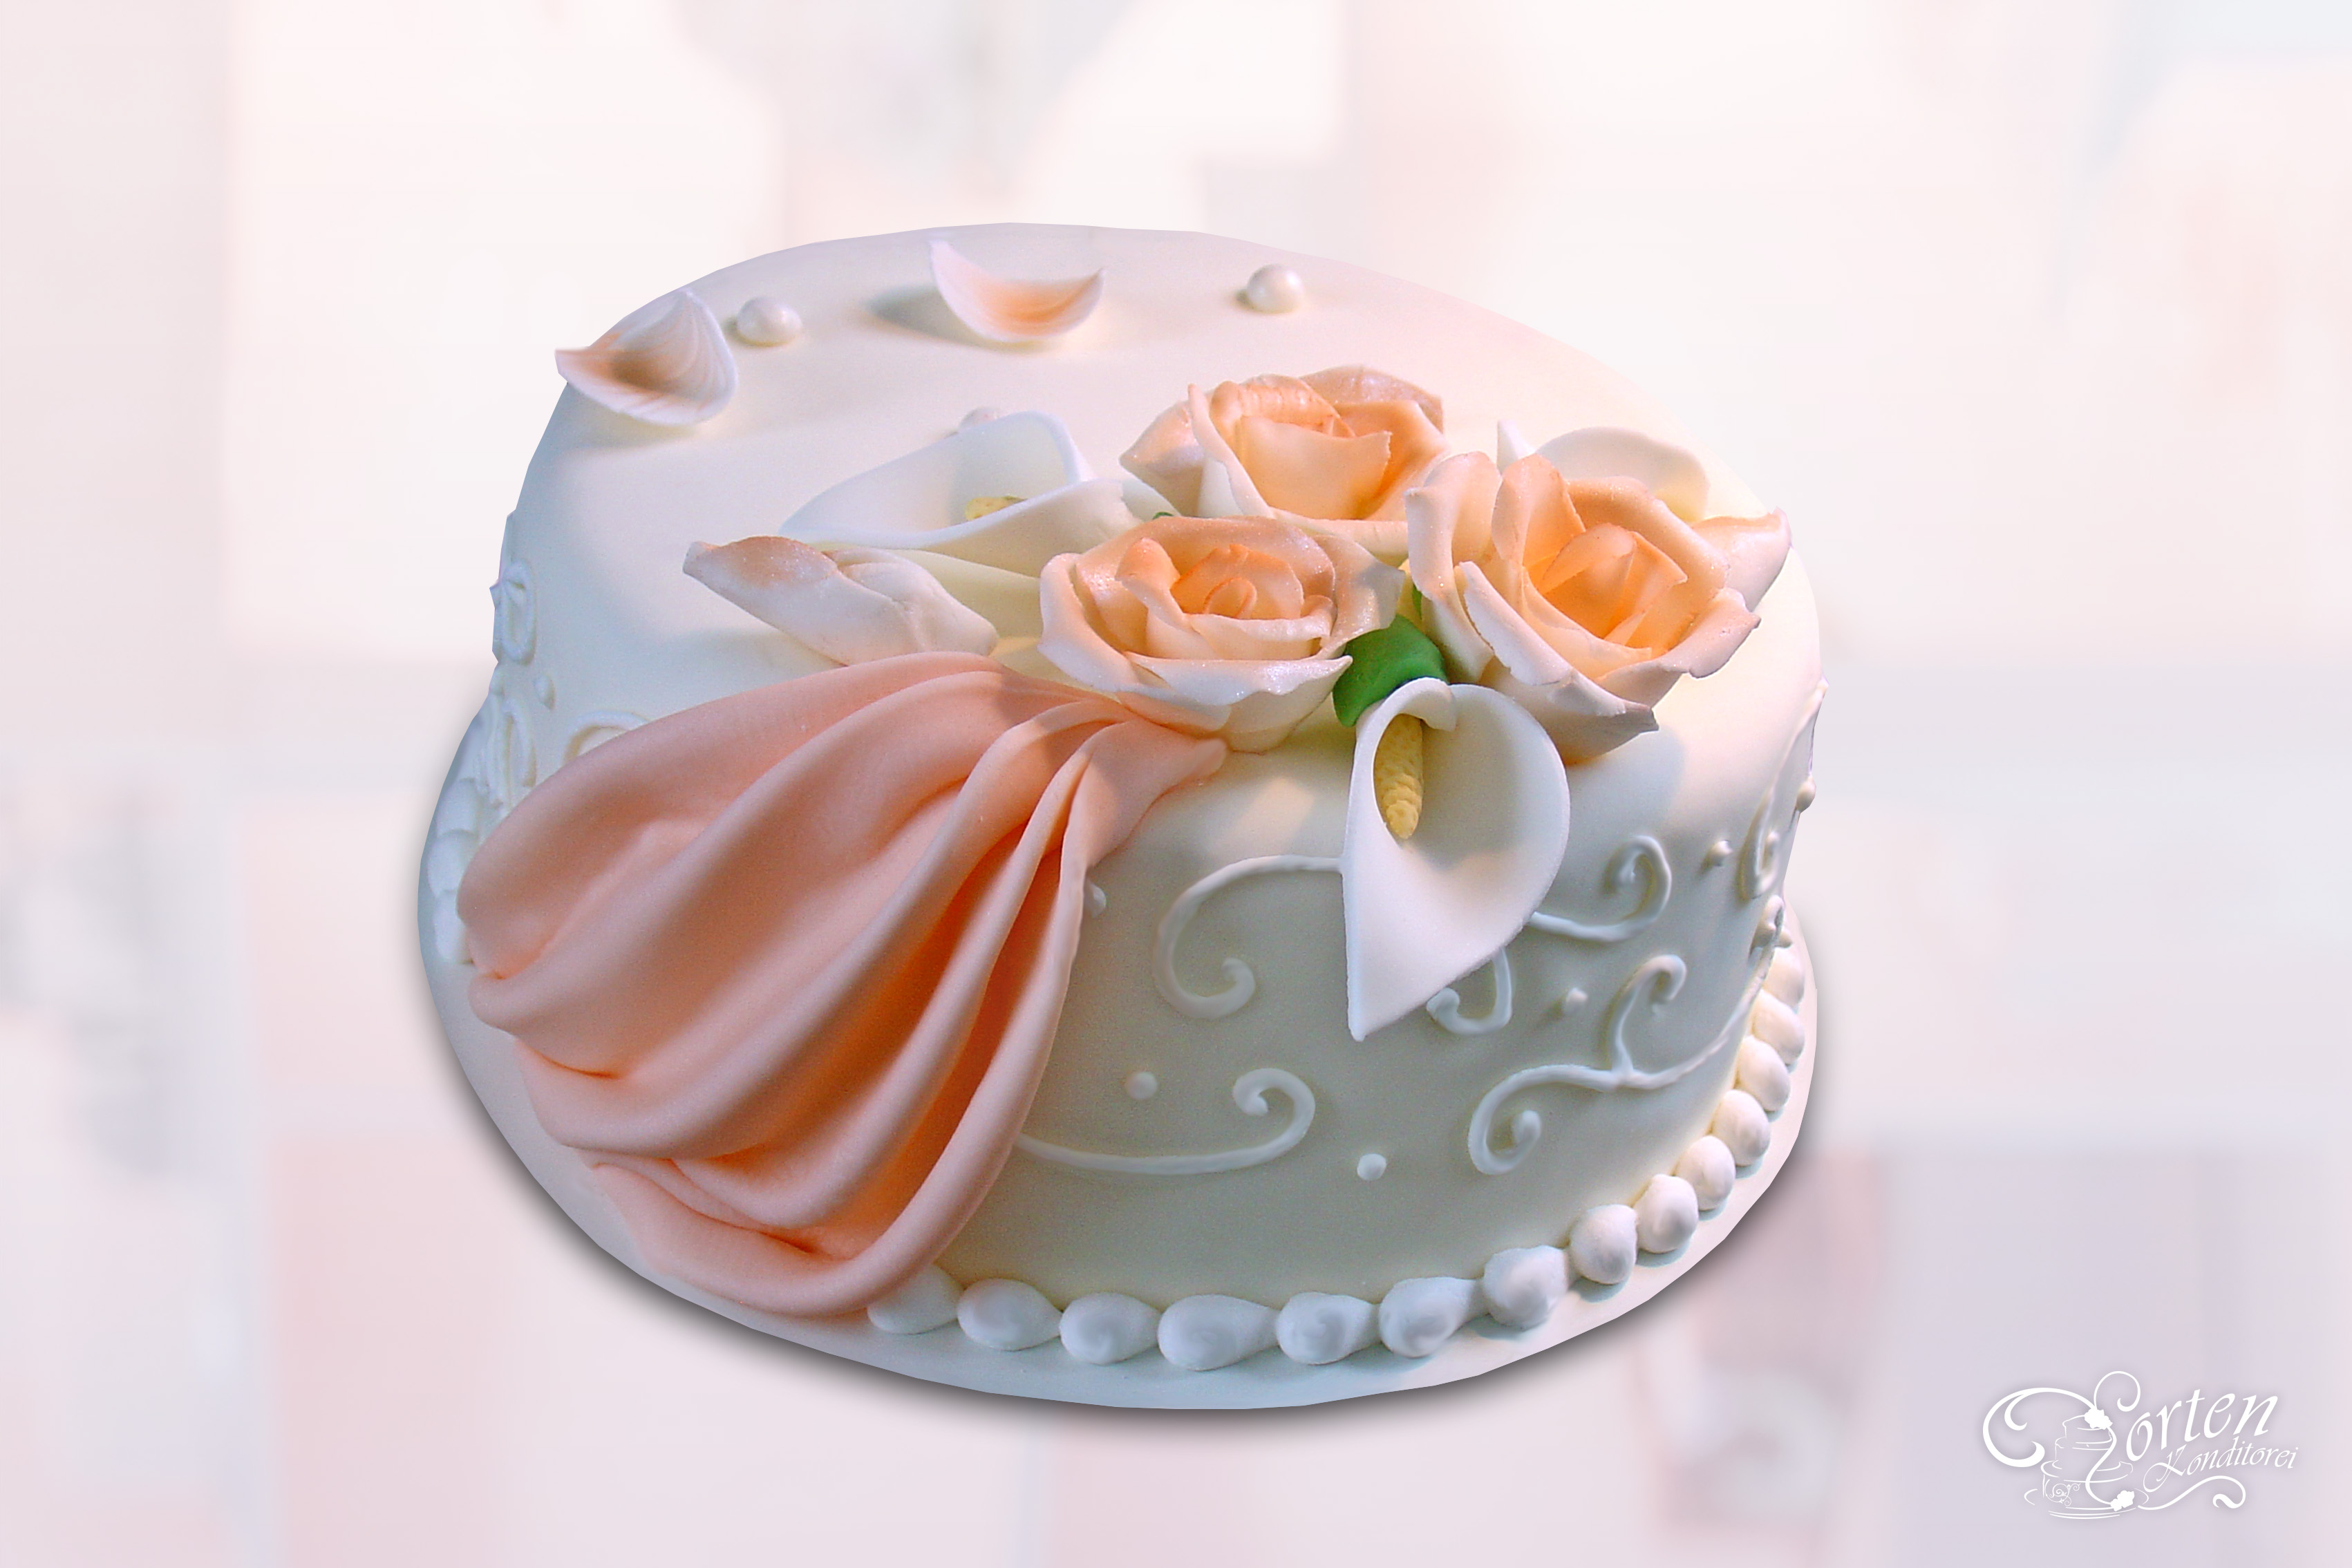 Geburtstags-Torte in orange-apriko